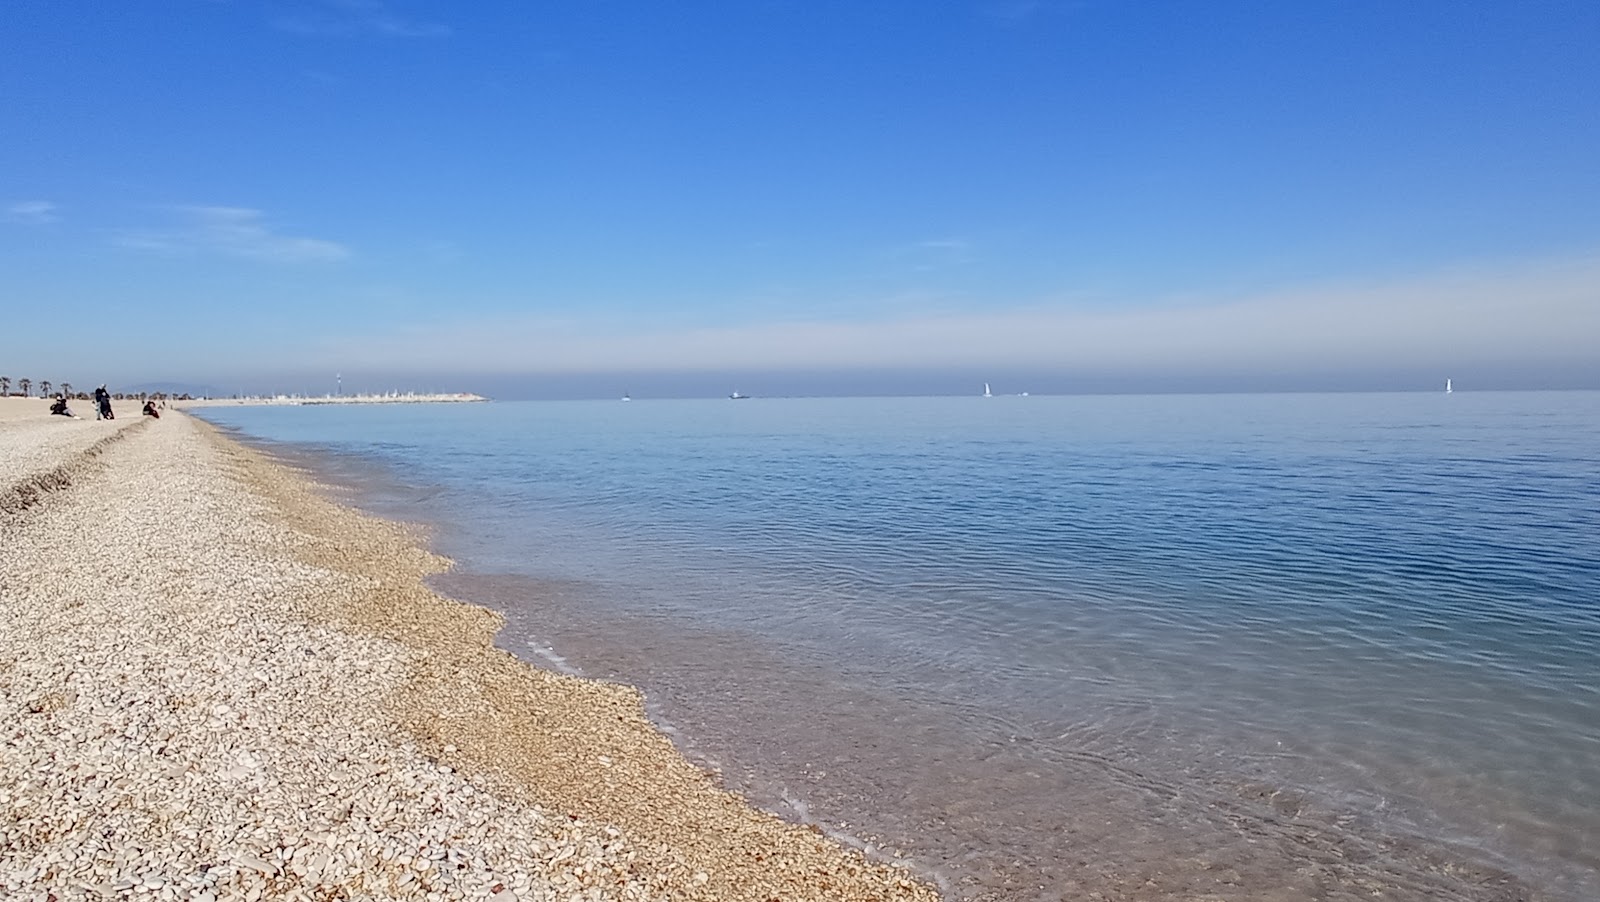 Photo of Spiaggia Sergio Piermanni with long straight shore